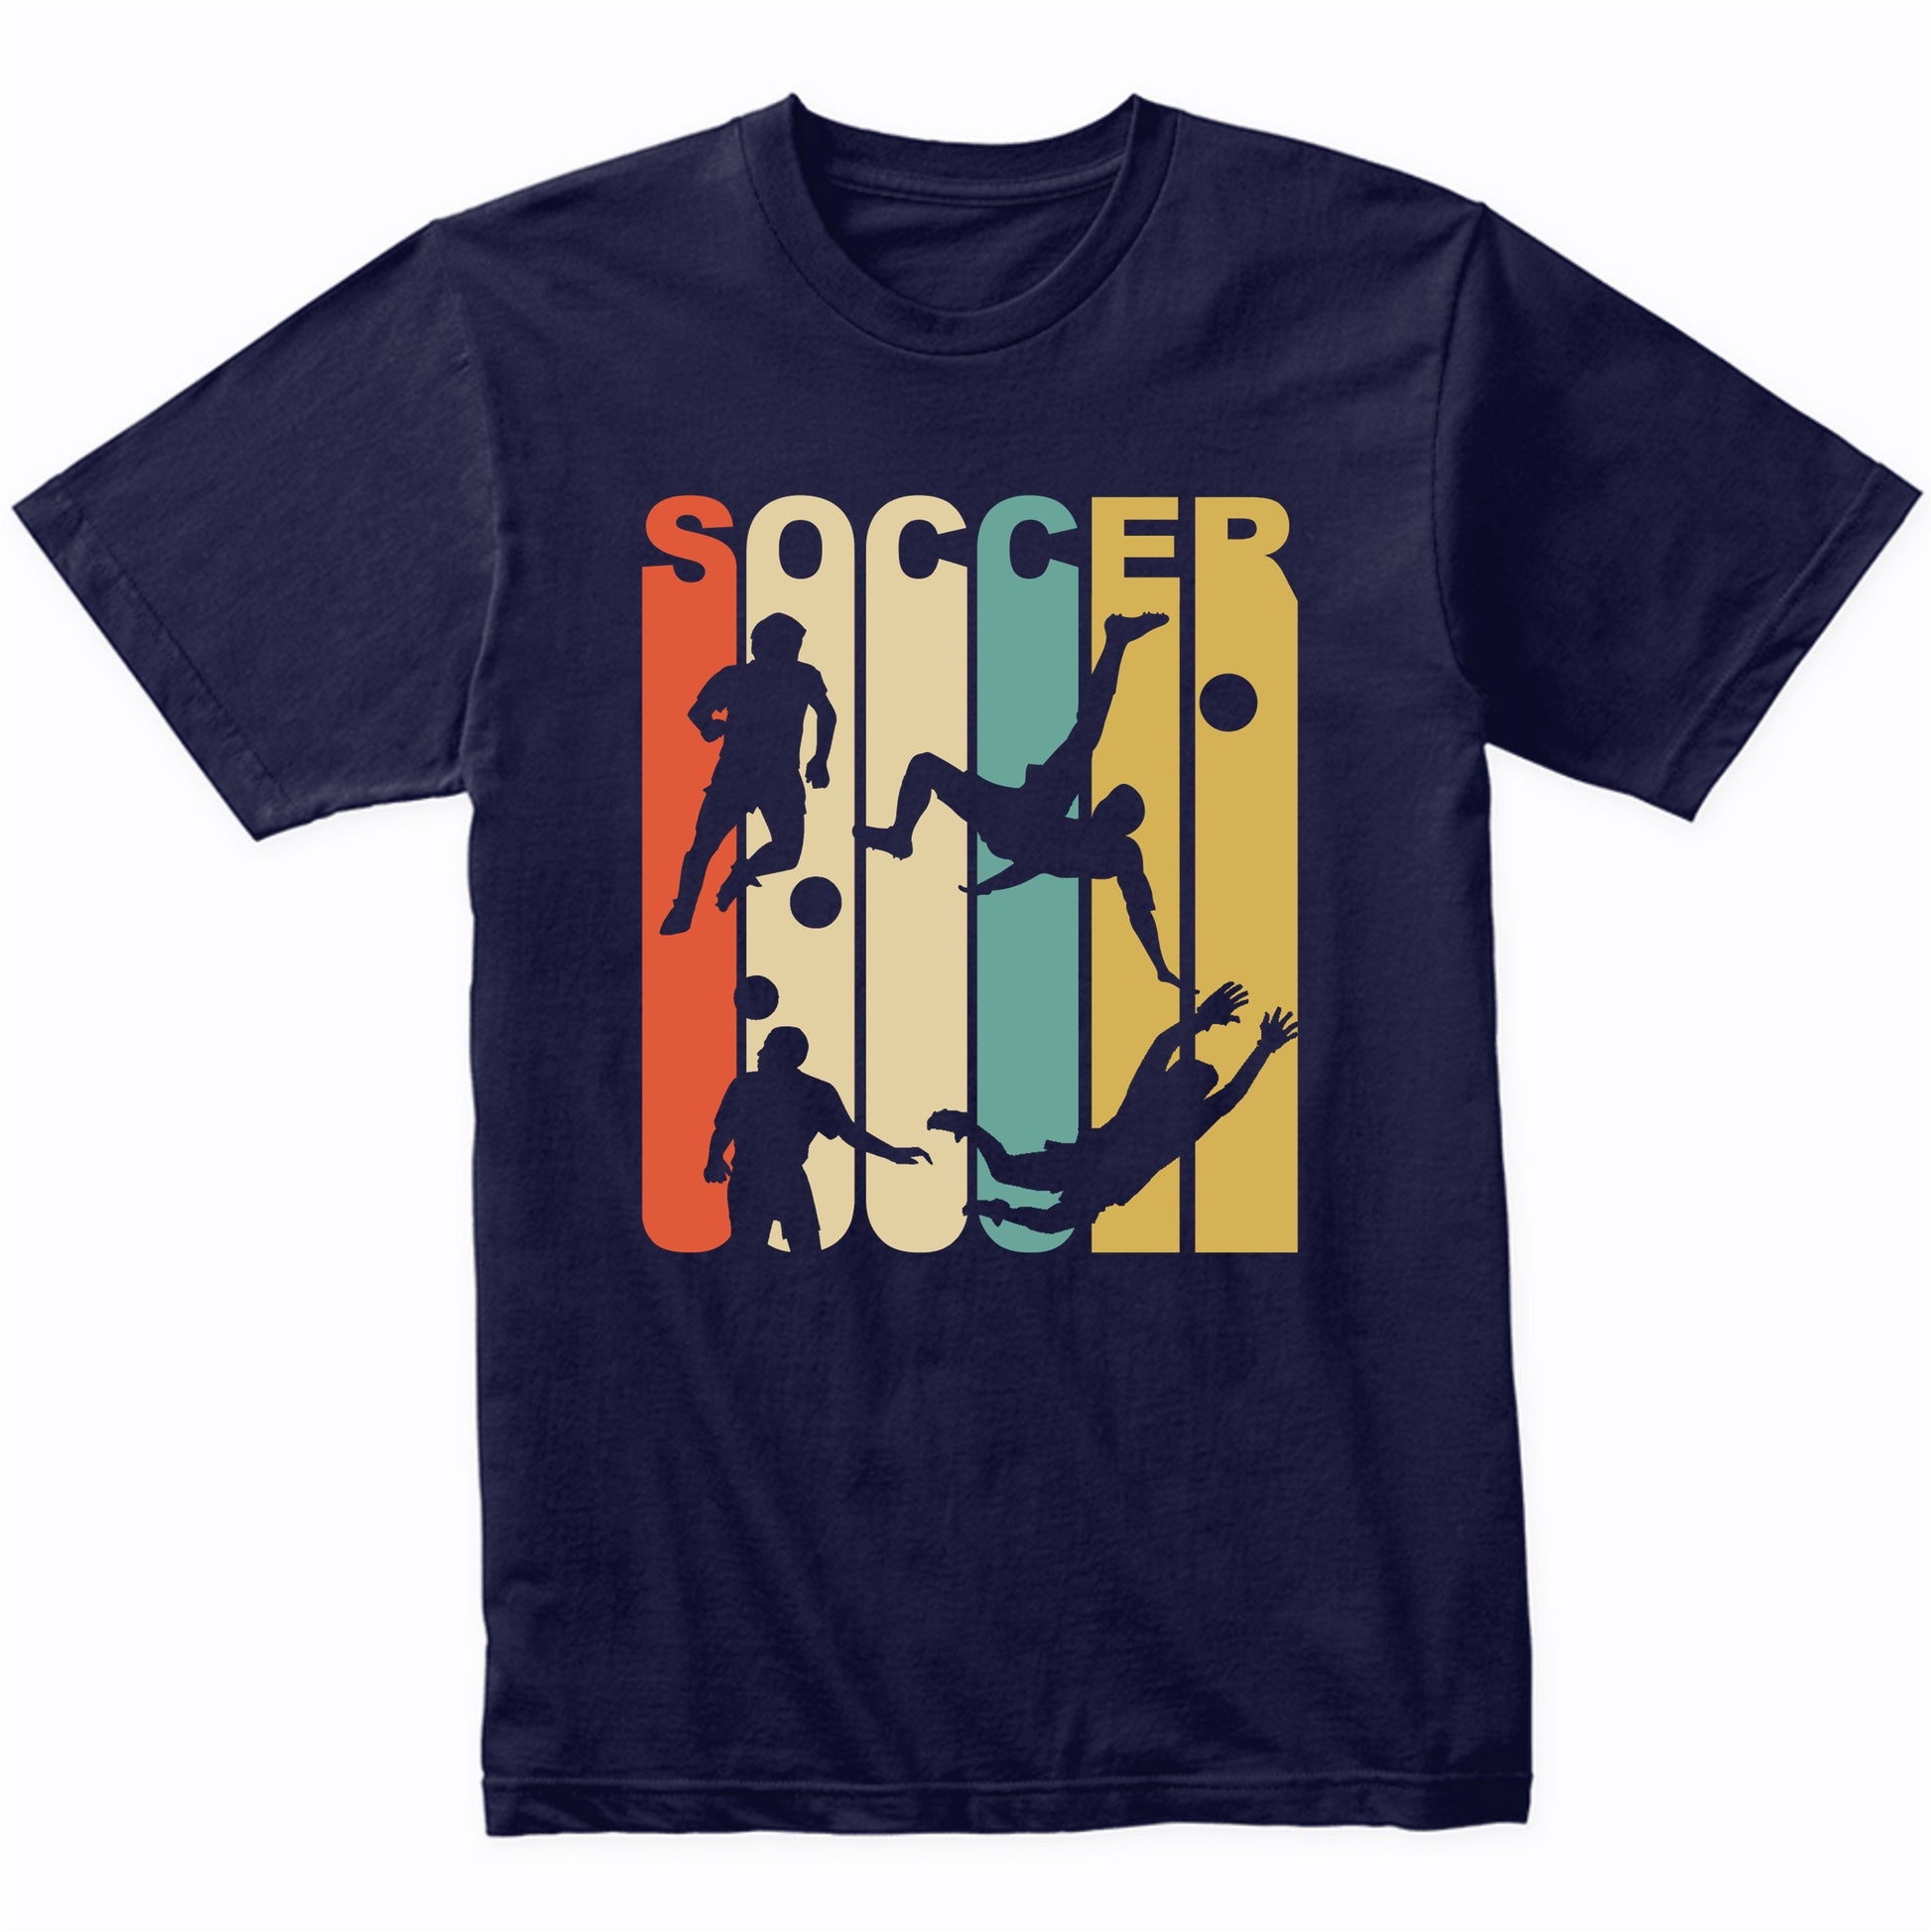 Vintage Retro 1970's Style Soccer T-Shirt